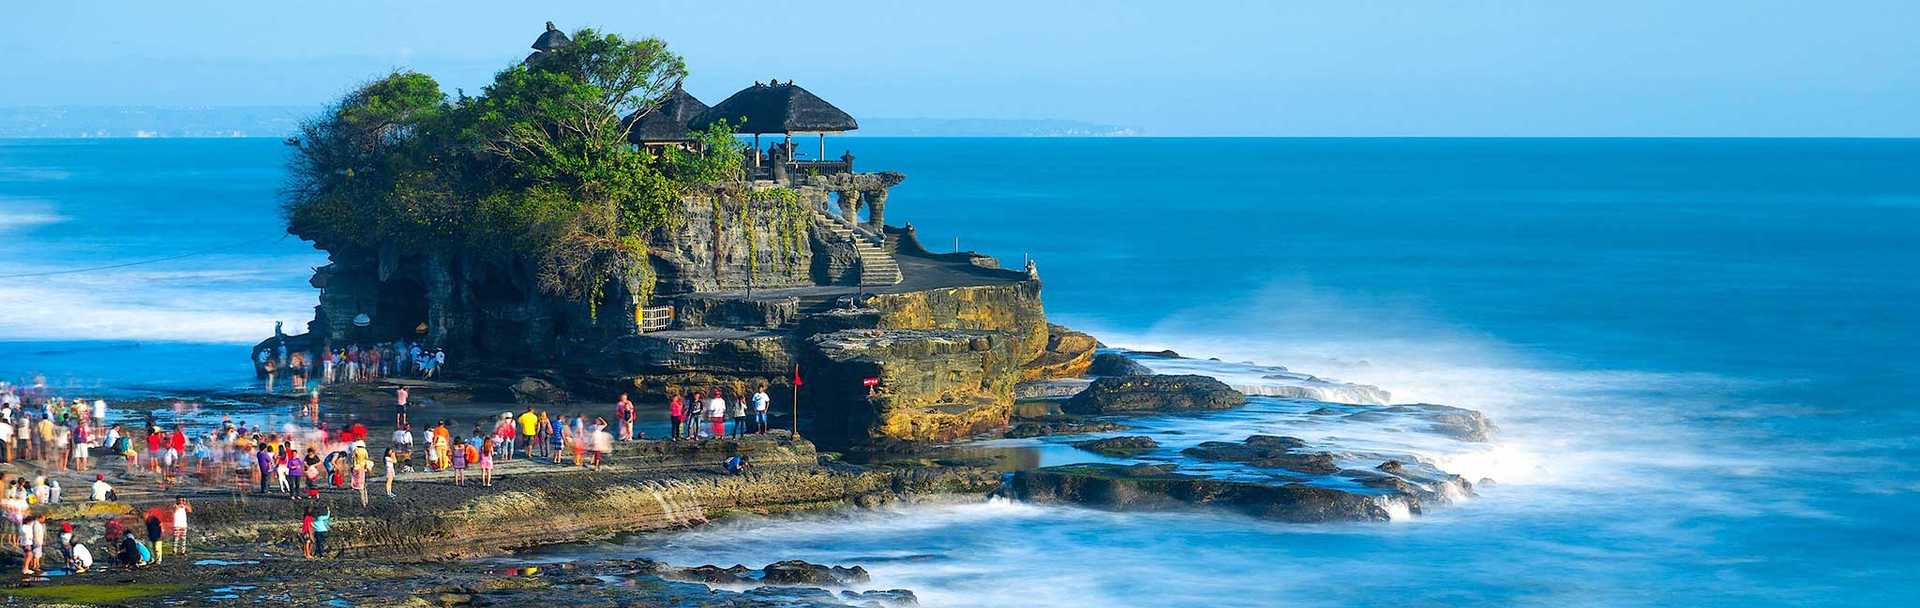 Bali Tour of Beraban's  Temple